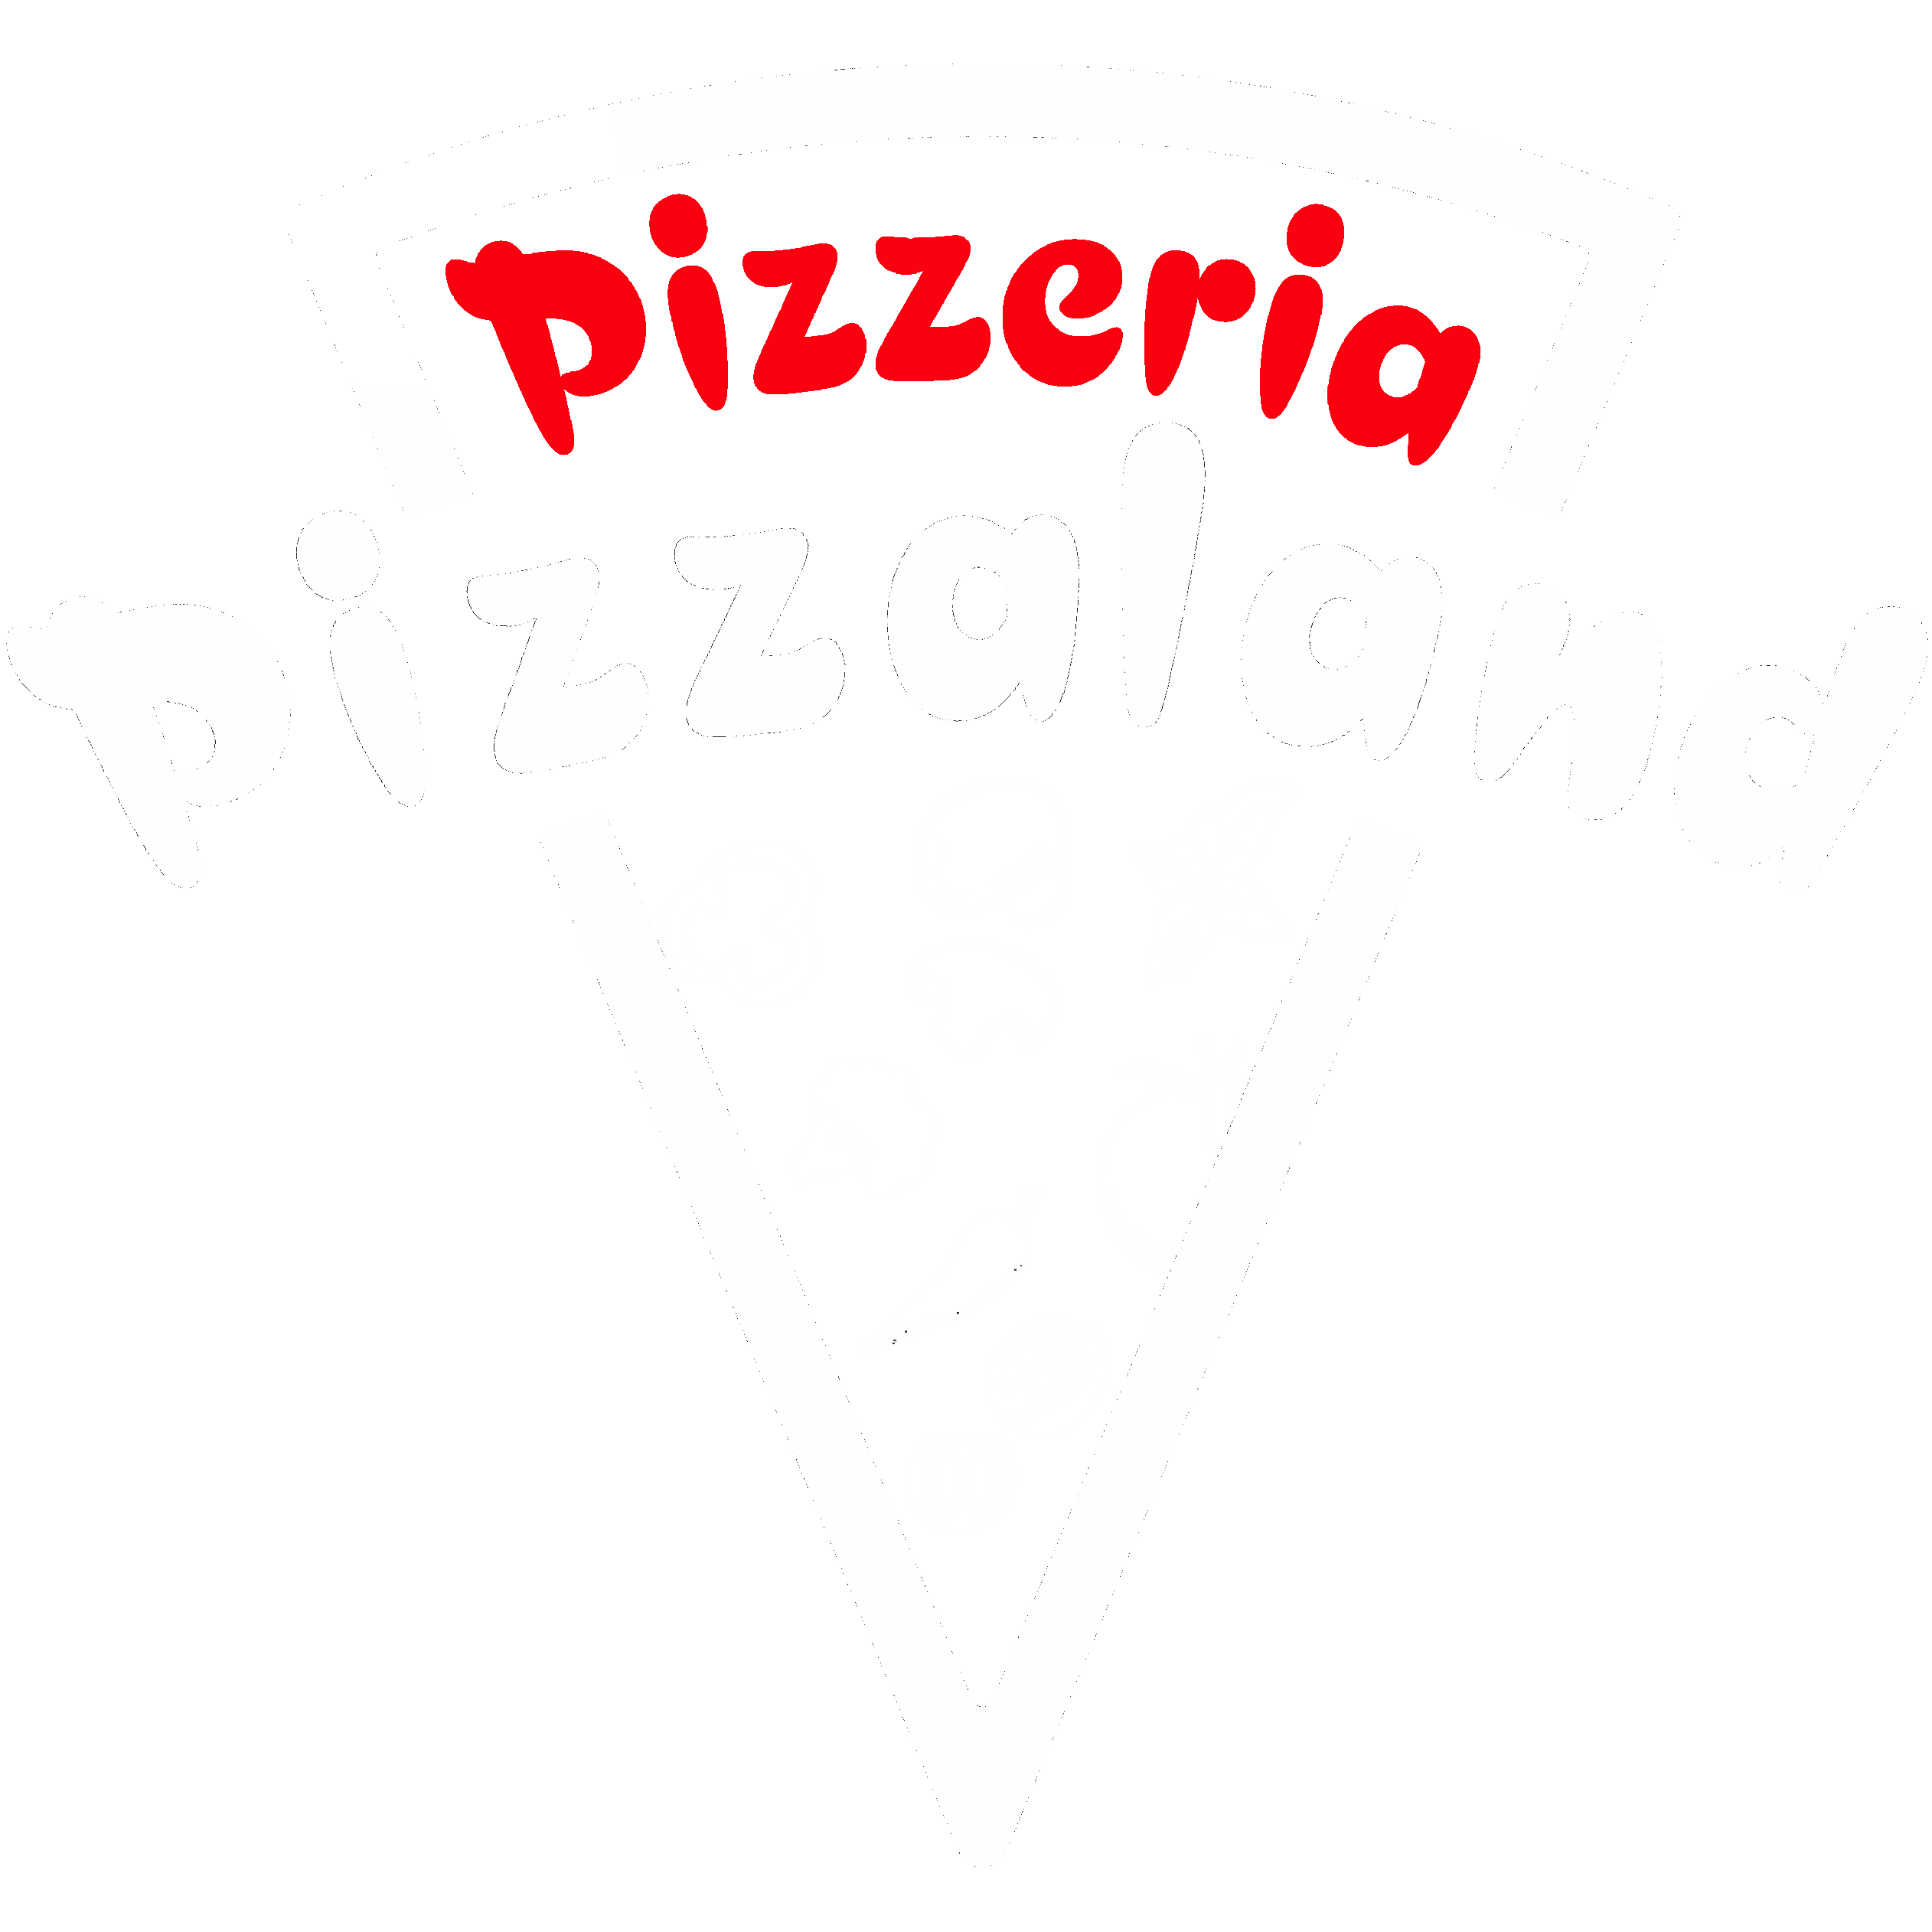 Pizzeria Pizzaland